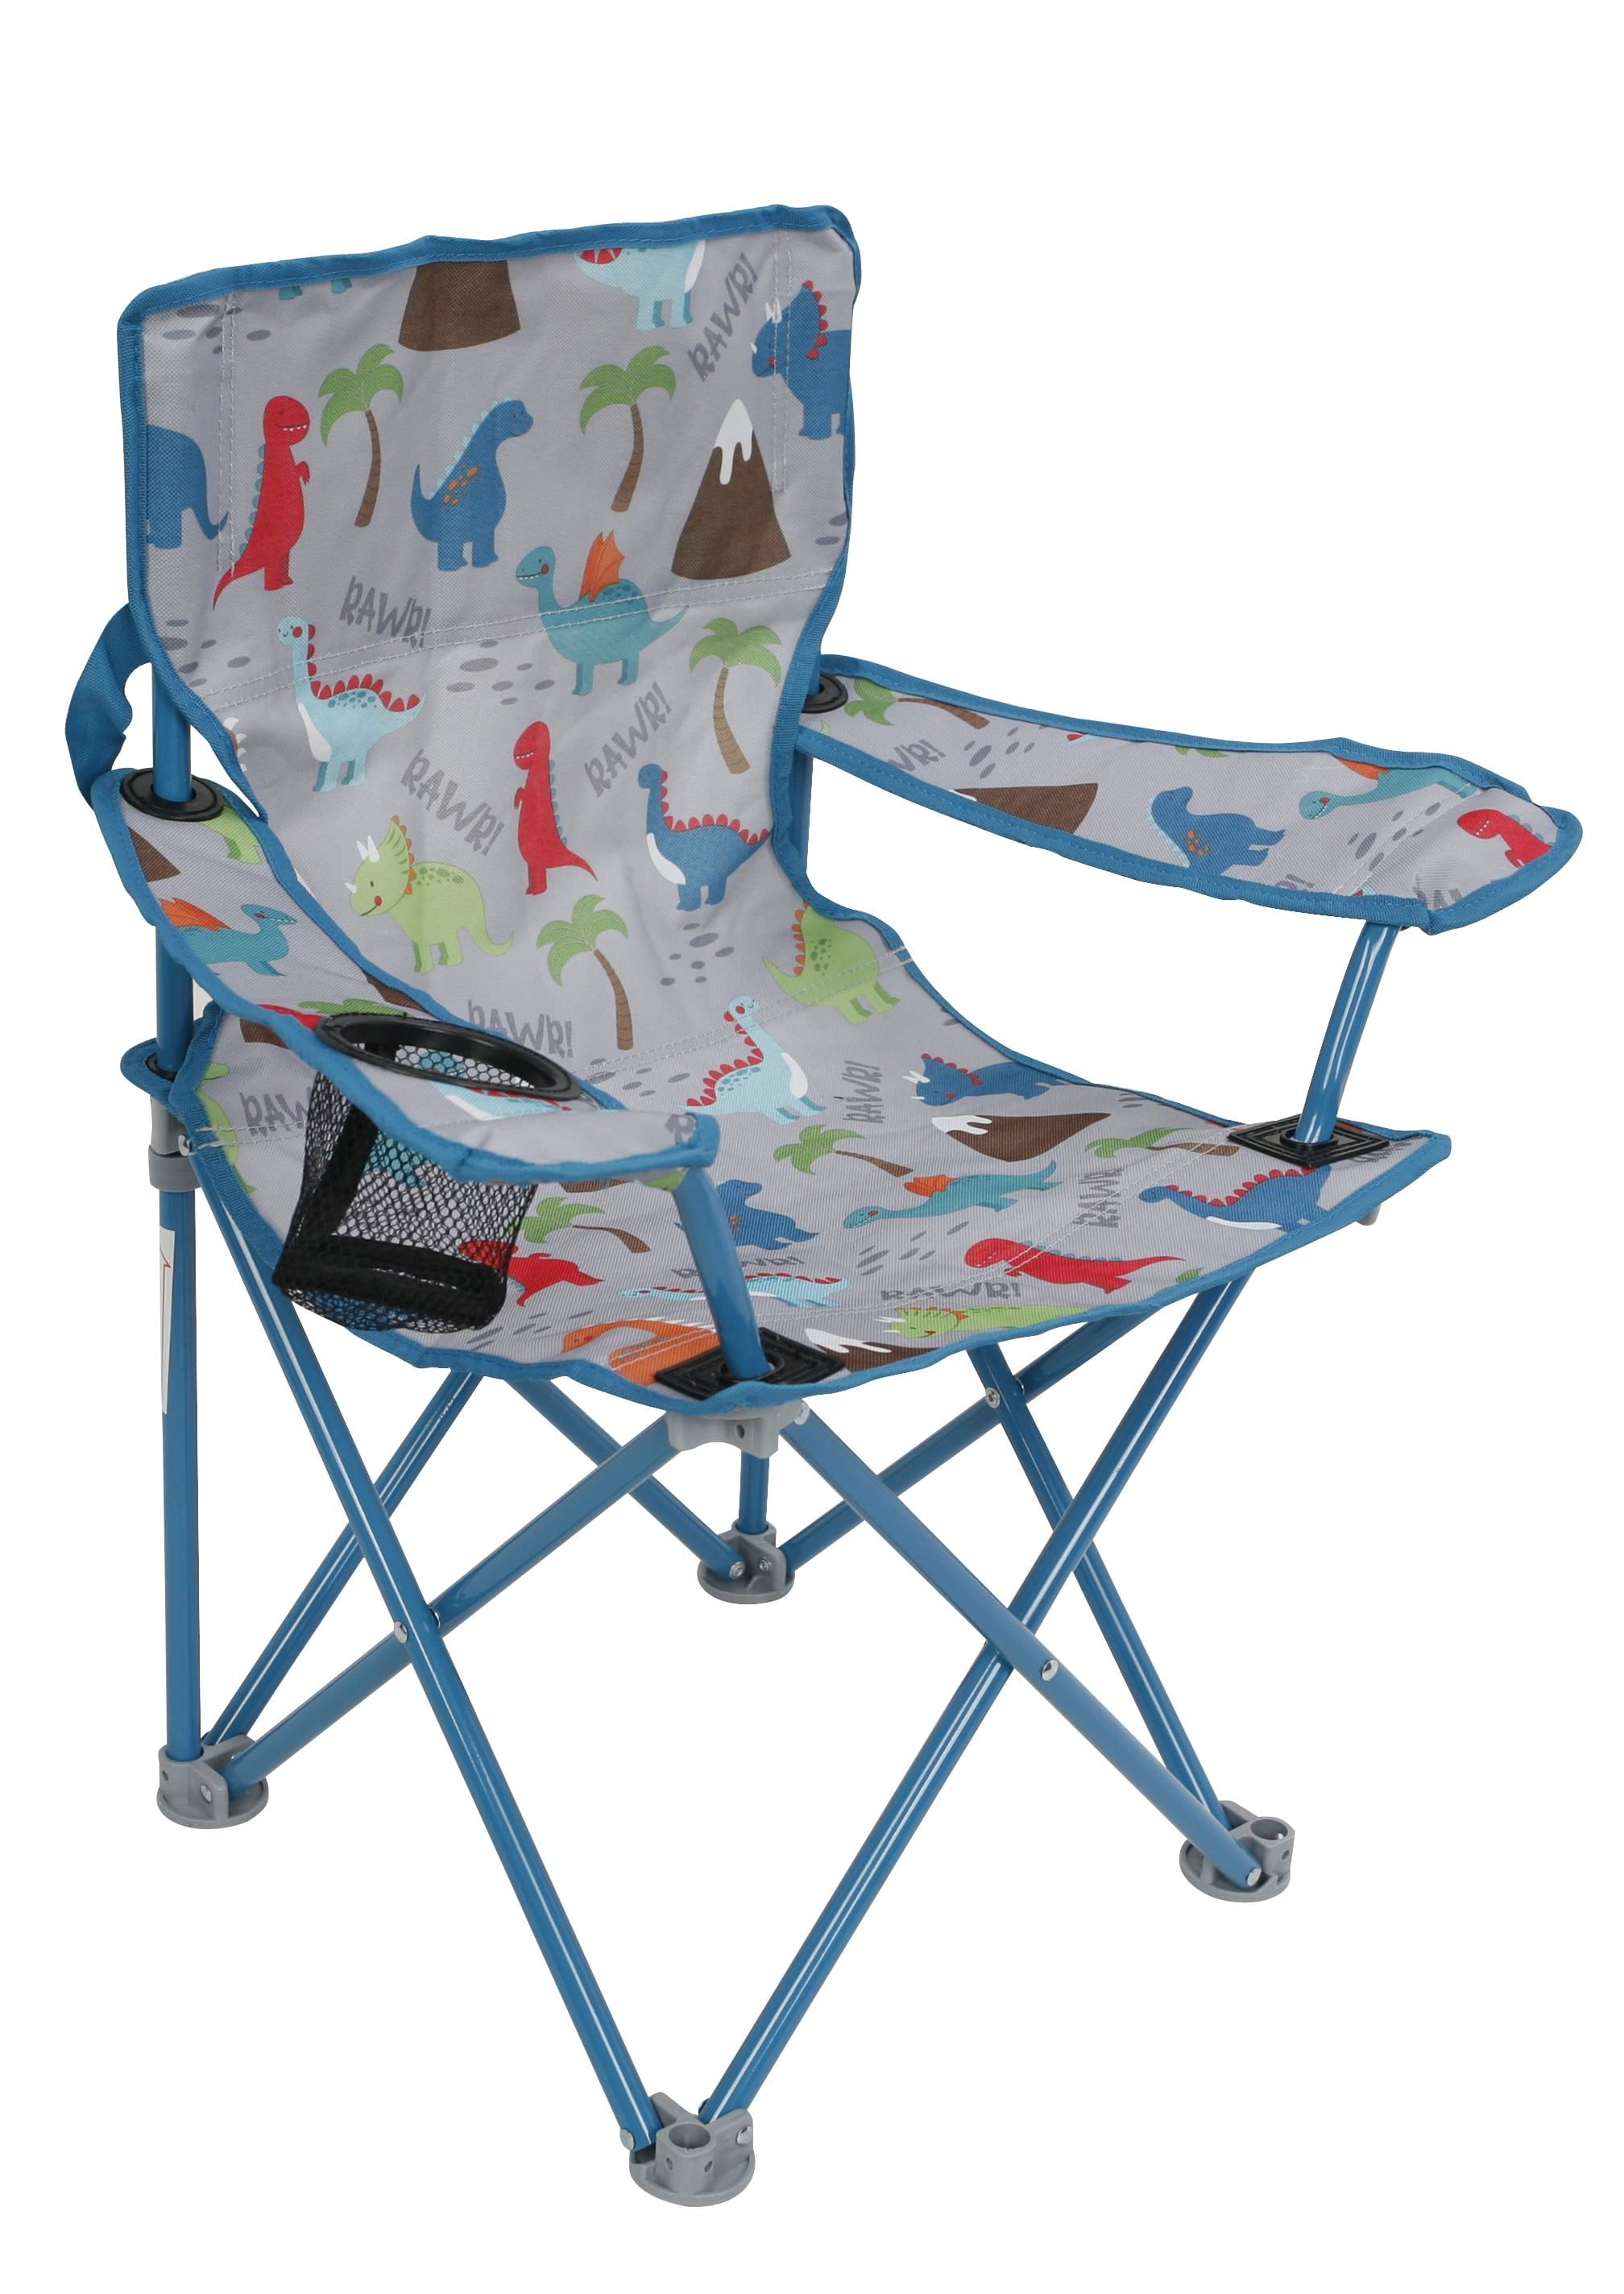 Crckt Folding Camp Chair For Kids With Lock 125lb Capacity Multi Color Dino Print Walmart Com Walmart Com